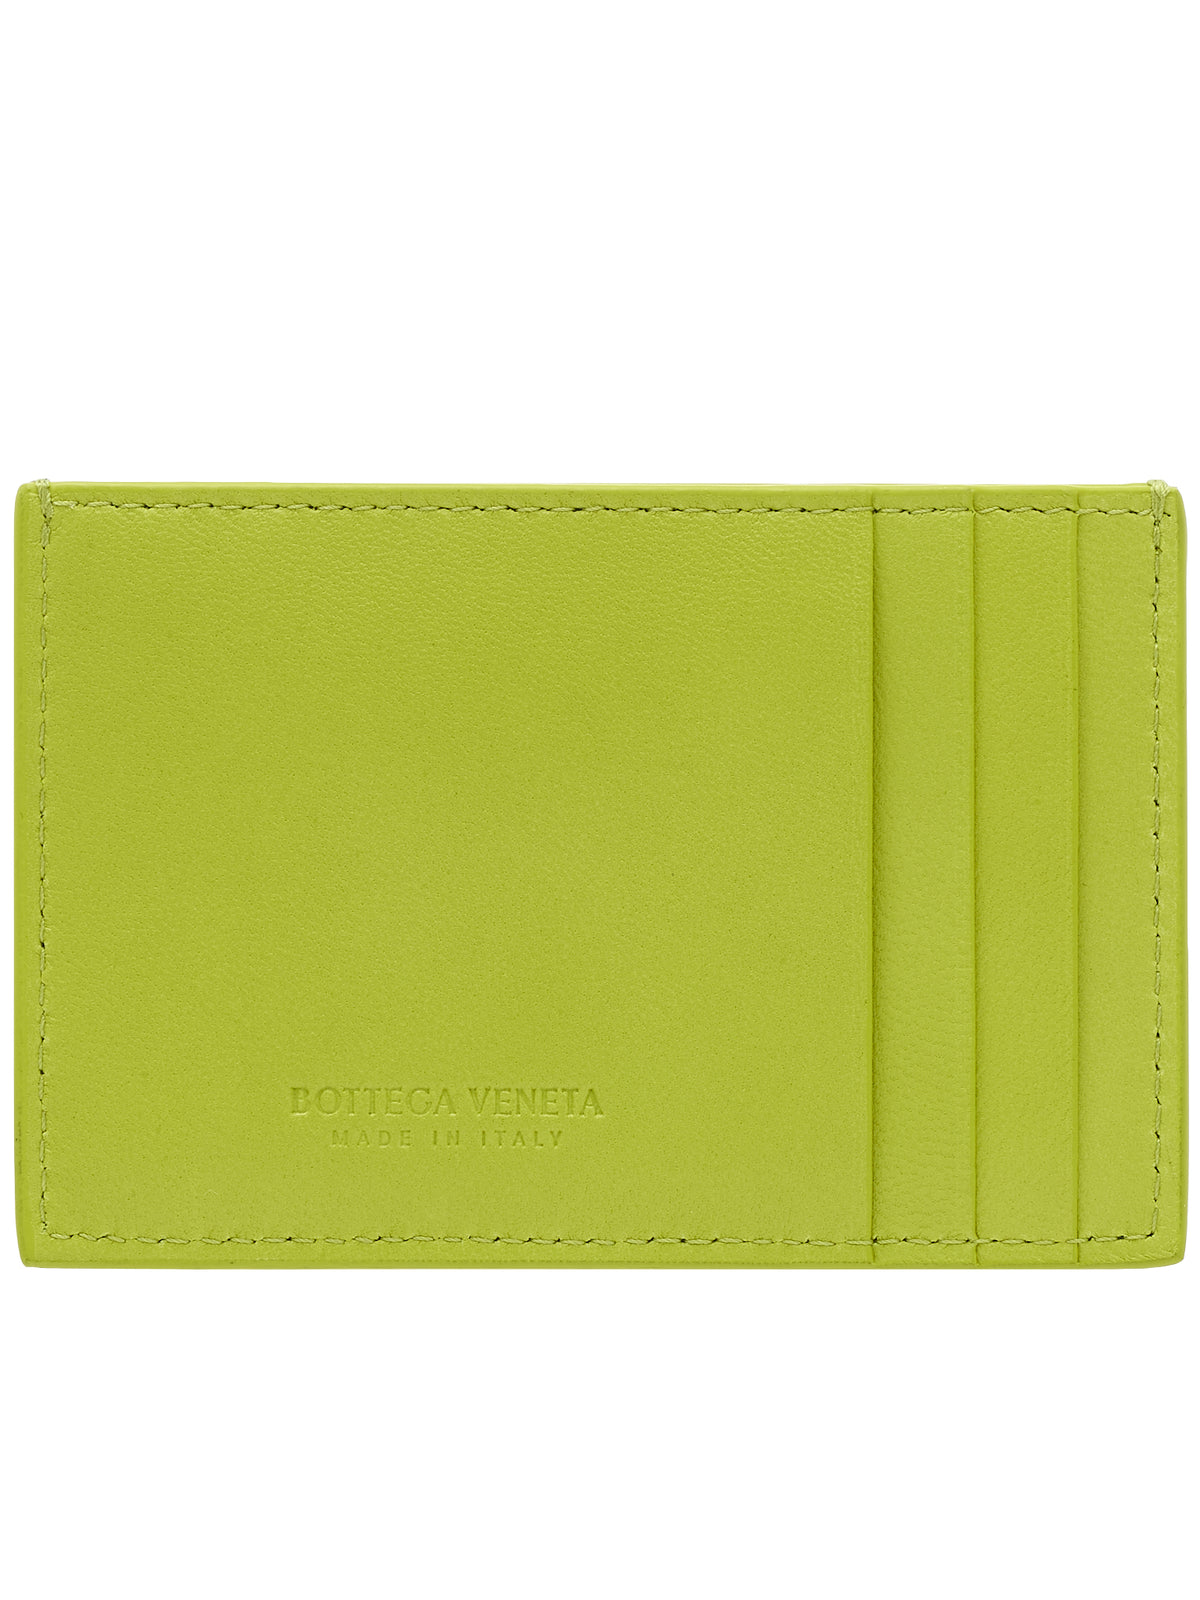 Bottega Veneta Credit Card Case | H.Lorenzo - back